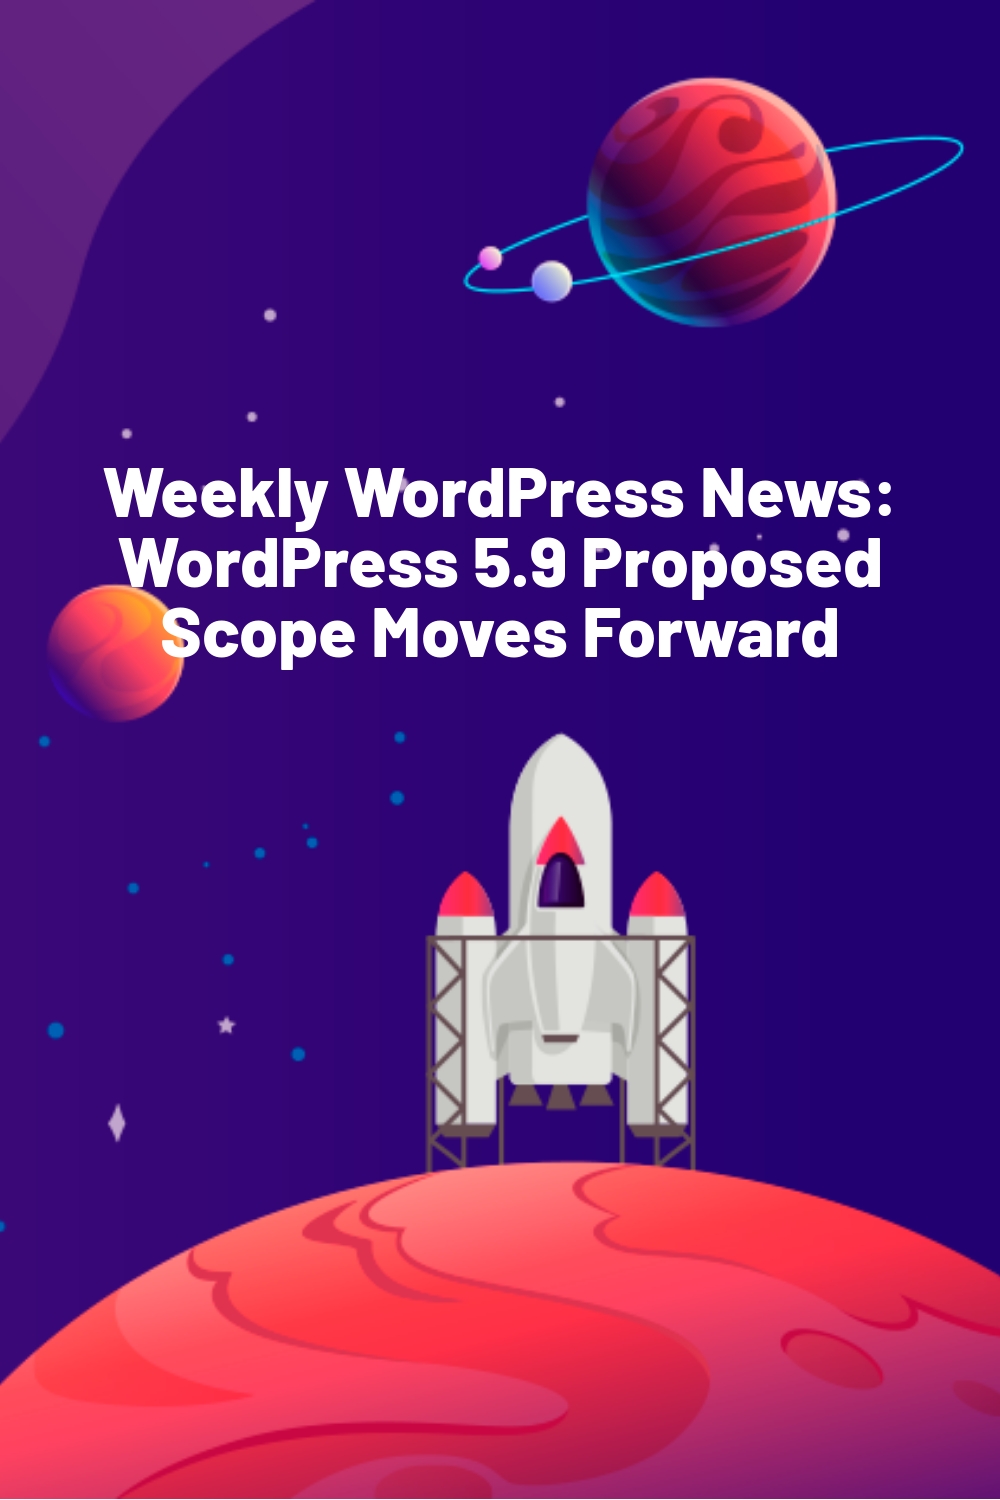 Weekly WordPress News: WordPress 5.9 Proposed Scope Moves Forward